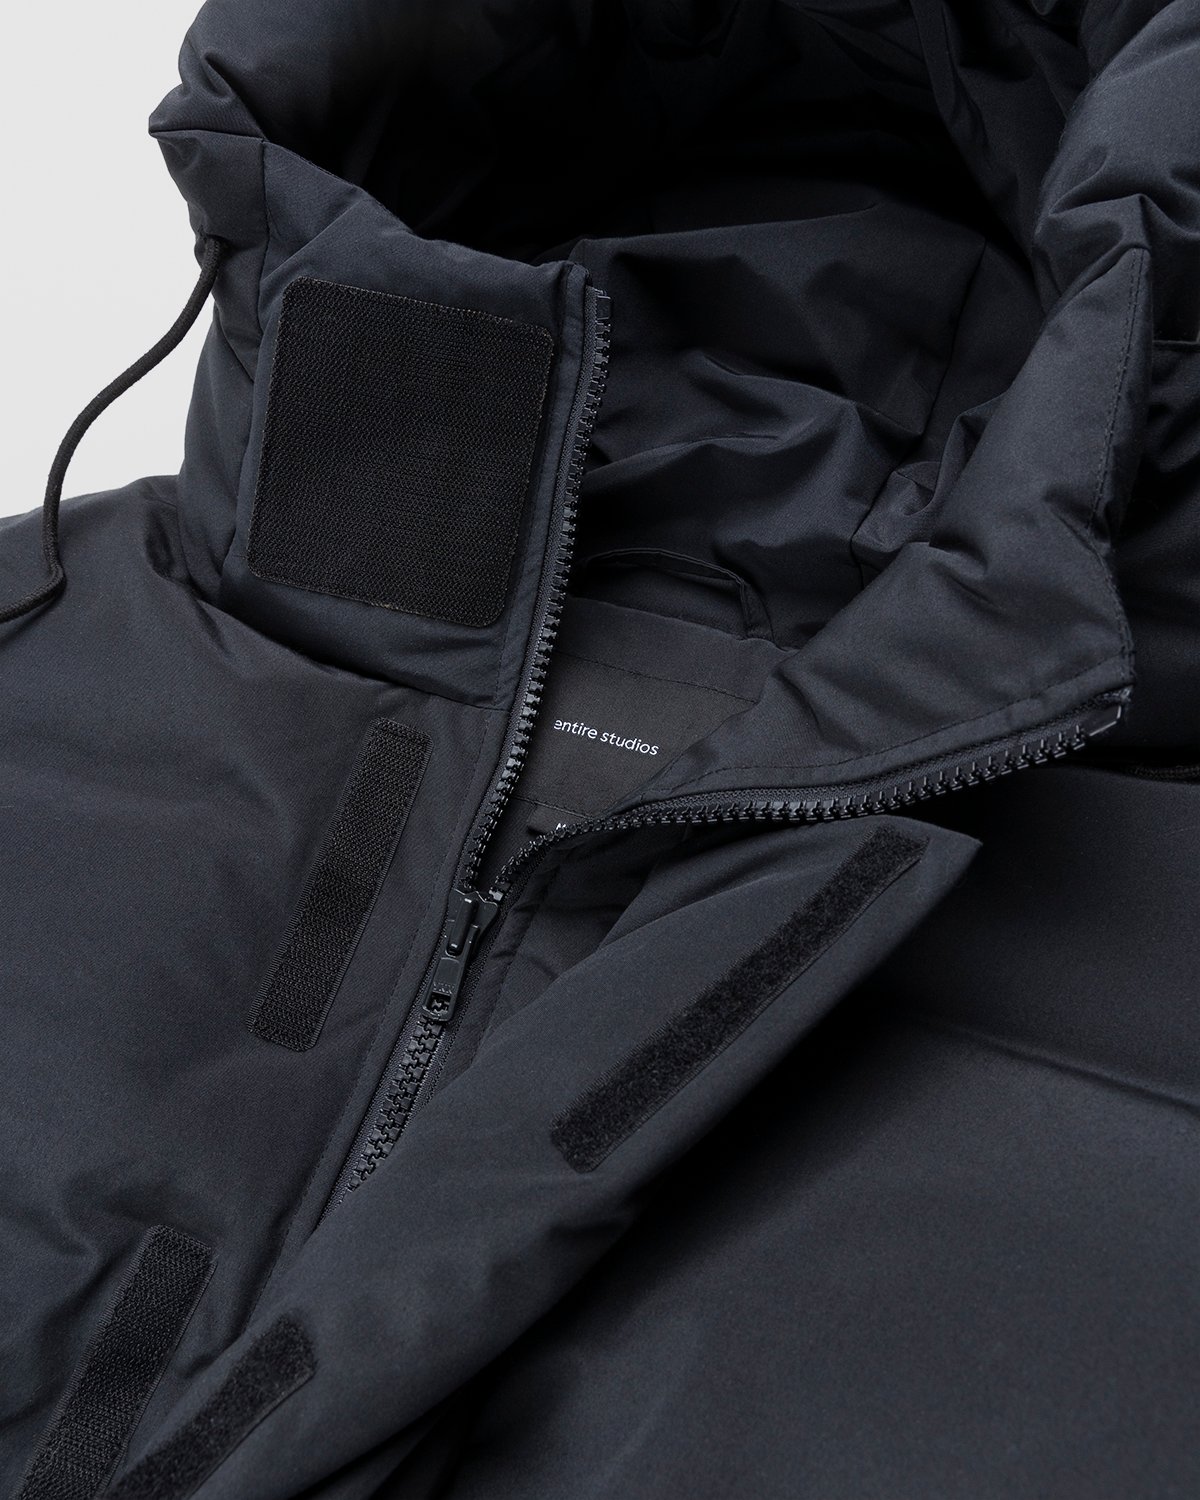 Entire Studios - SOA Puffer Jacket Soot - Clothing - Black - Image 3